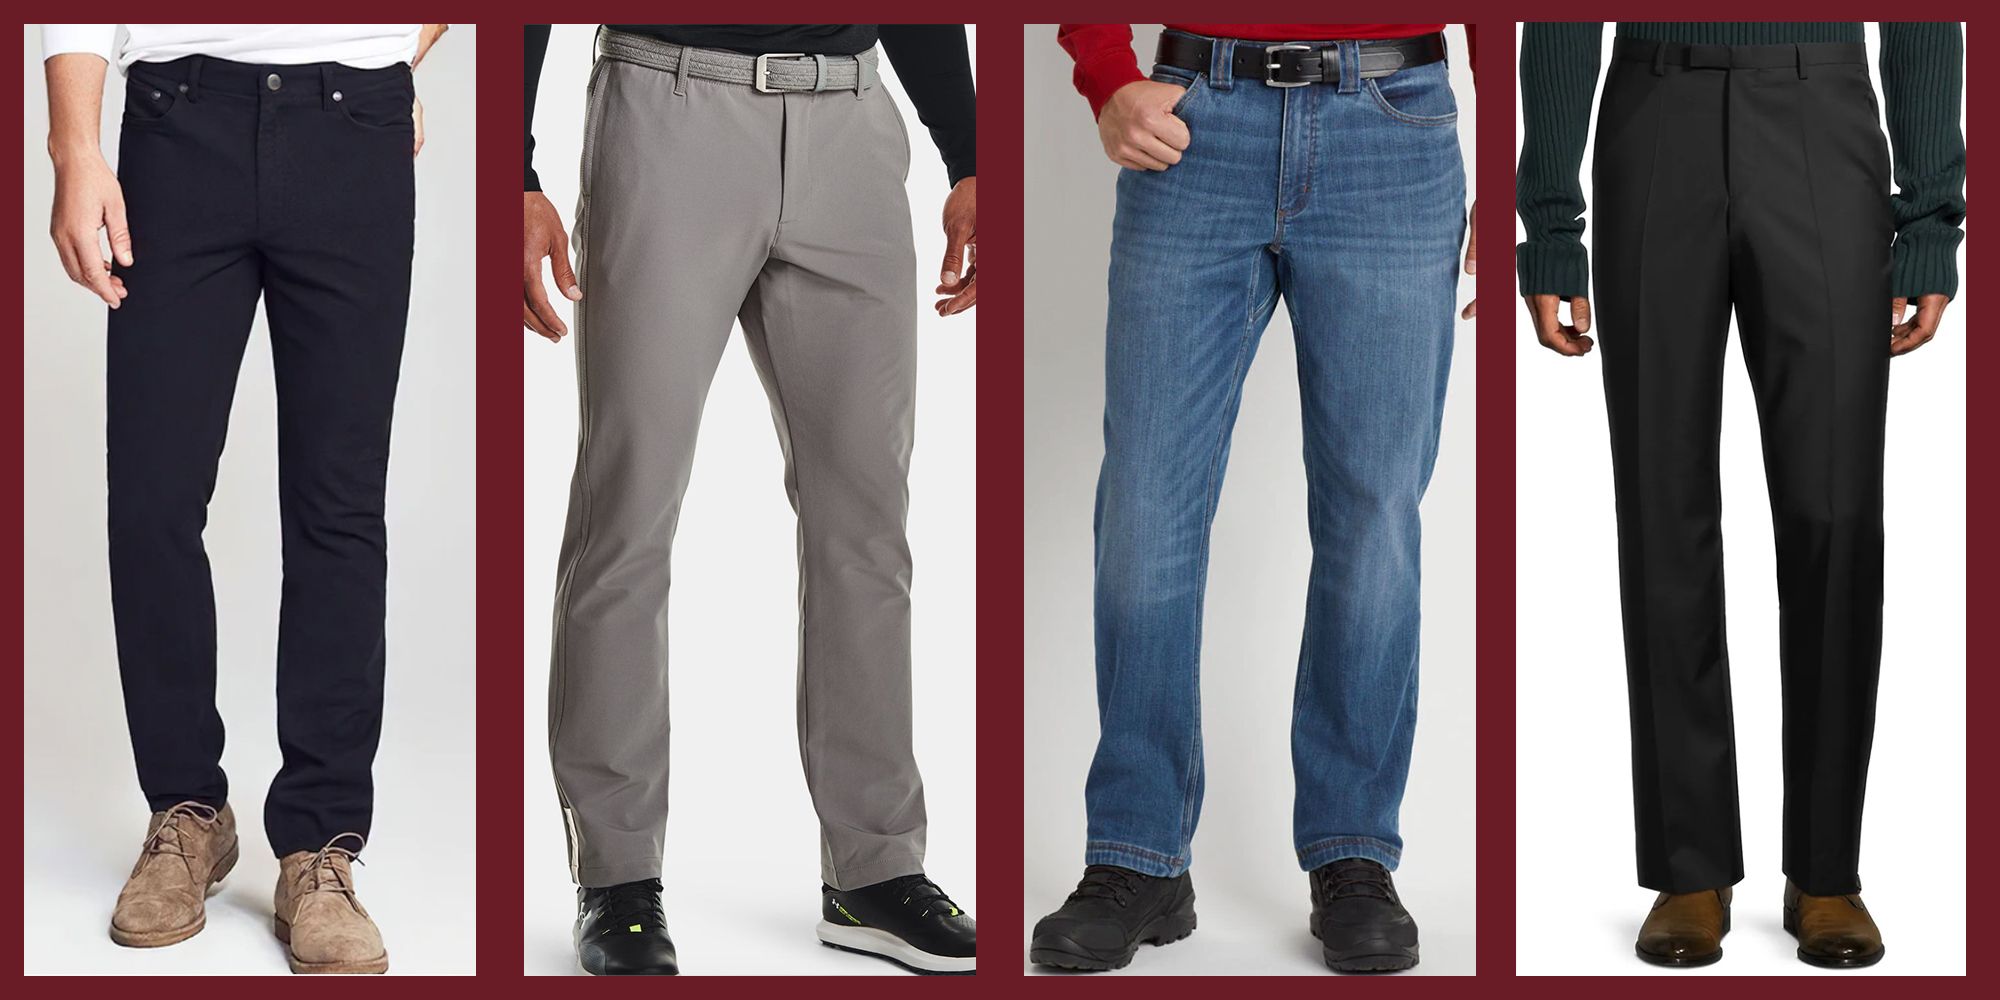 Winter Pants for Men - 5 Best Options